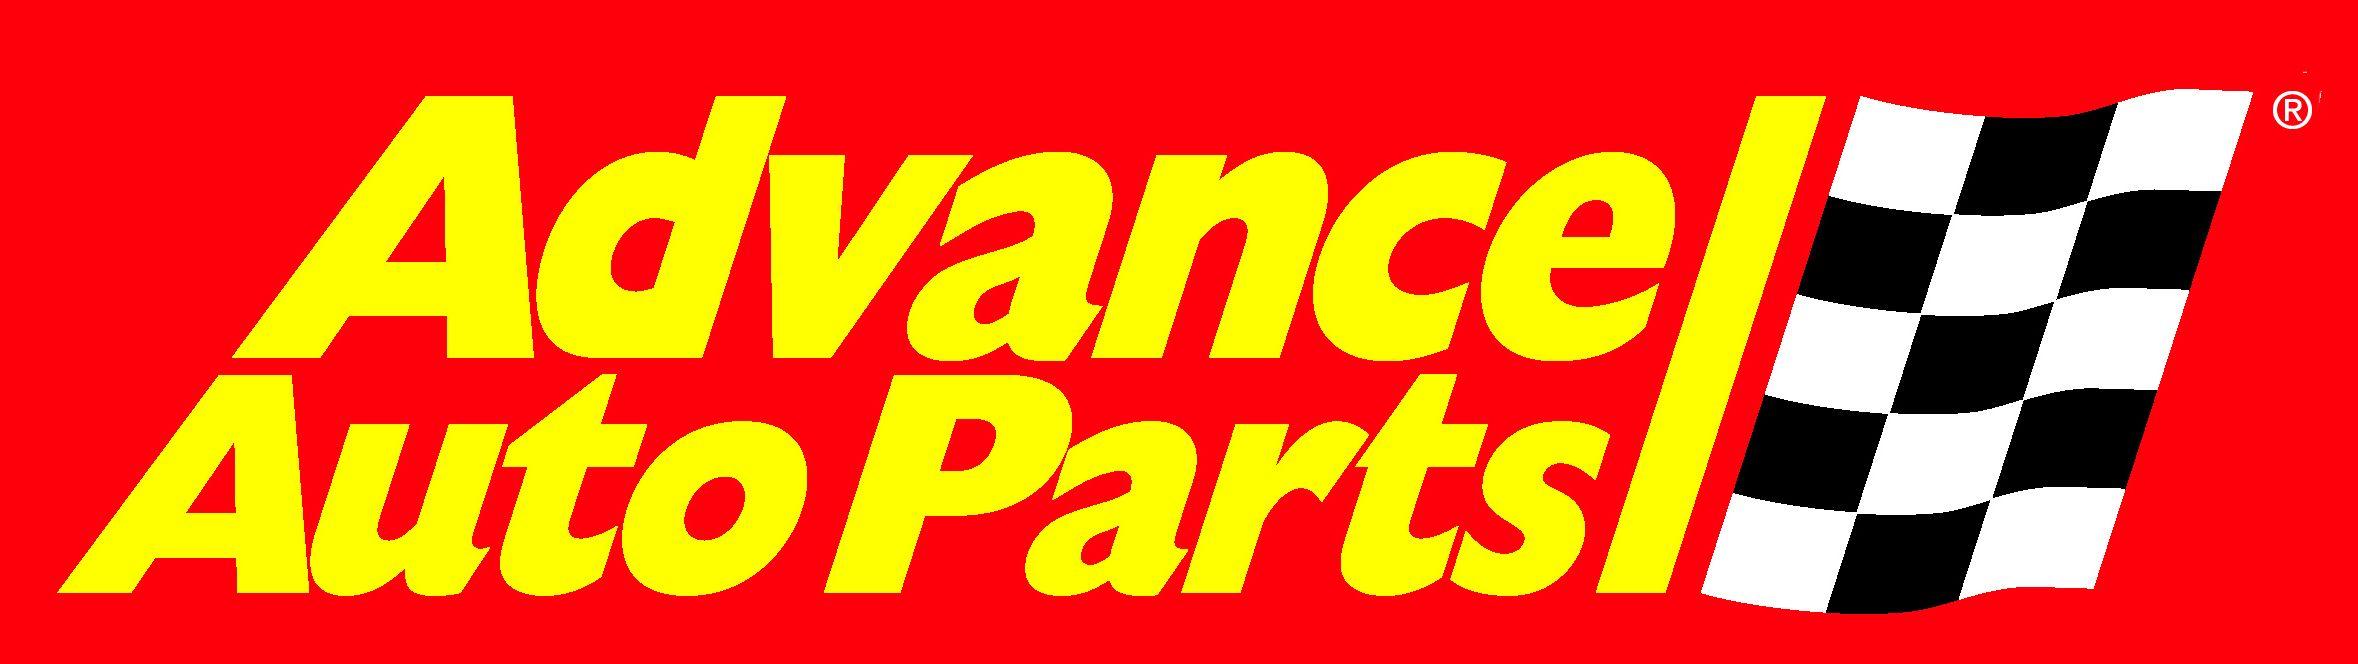 Advance Auto Parts Logo - Motor Oil Money Maker from Advance Auto Parts | Brand Logos | Car ...